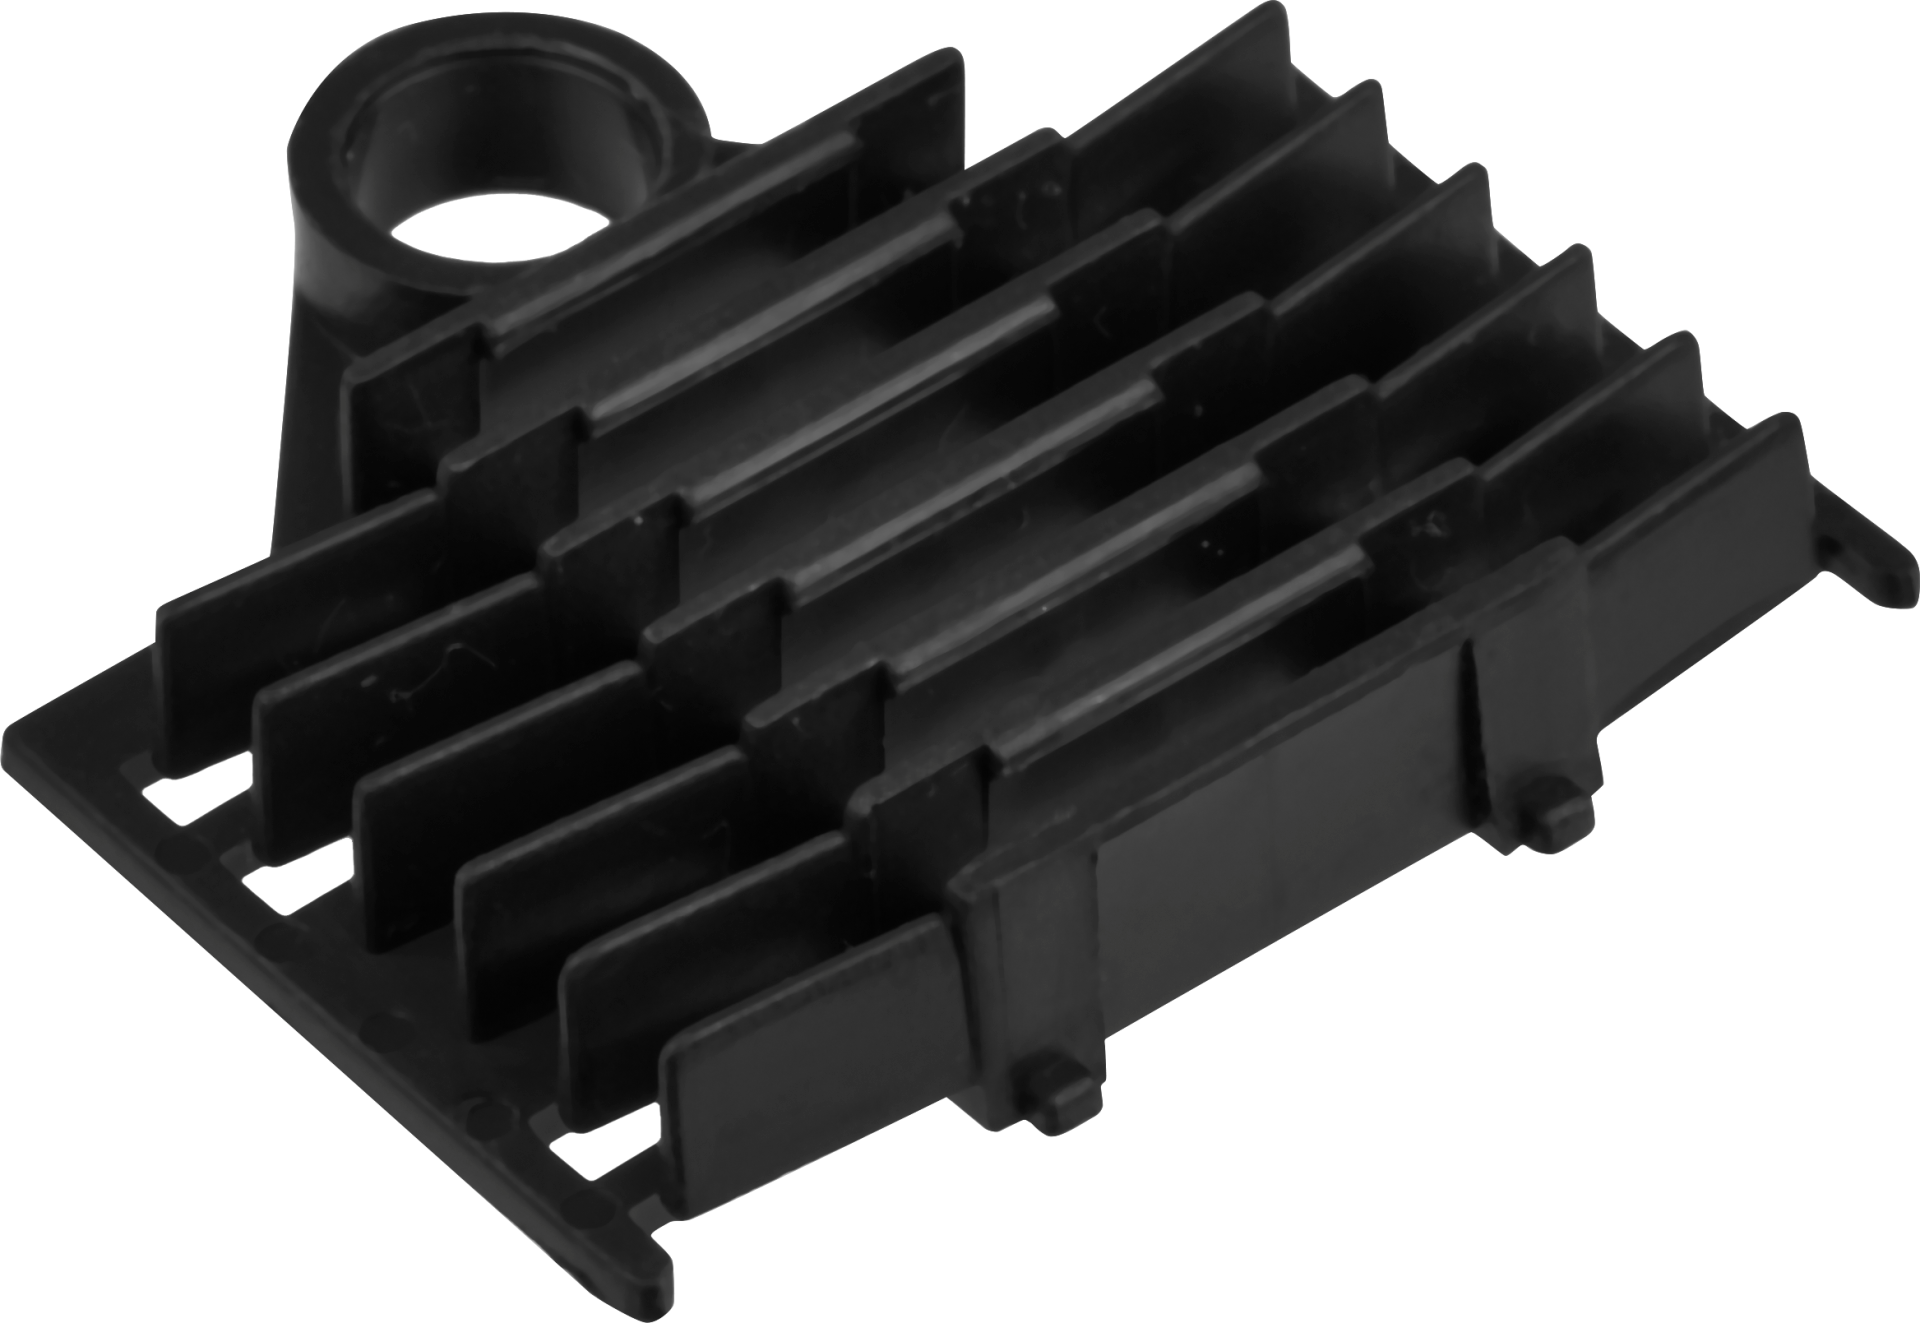 Splice holder for 12 x arc splices with shrink tube, black